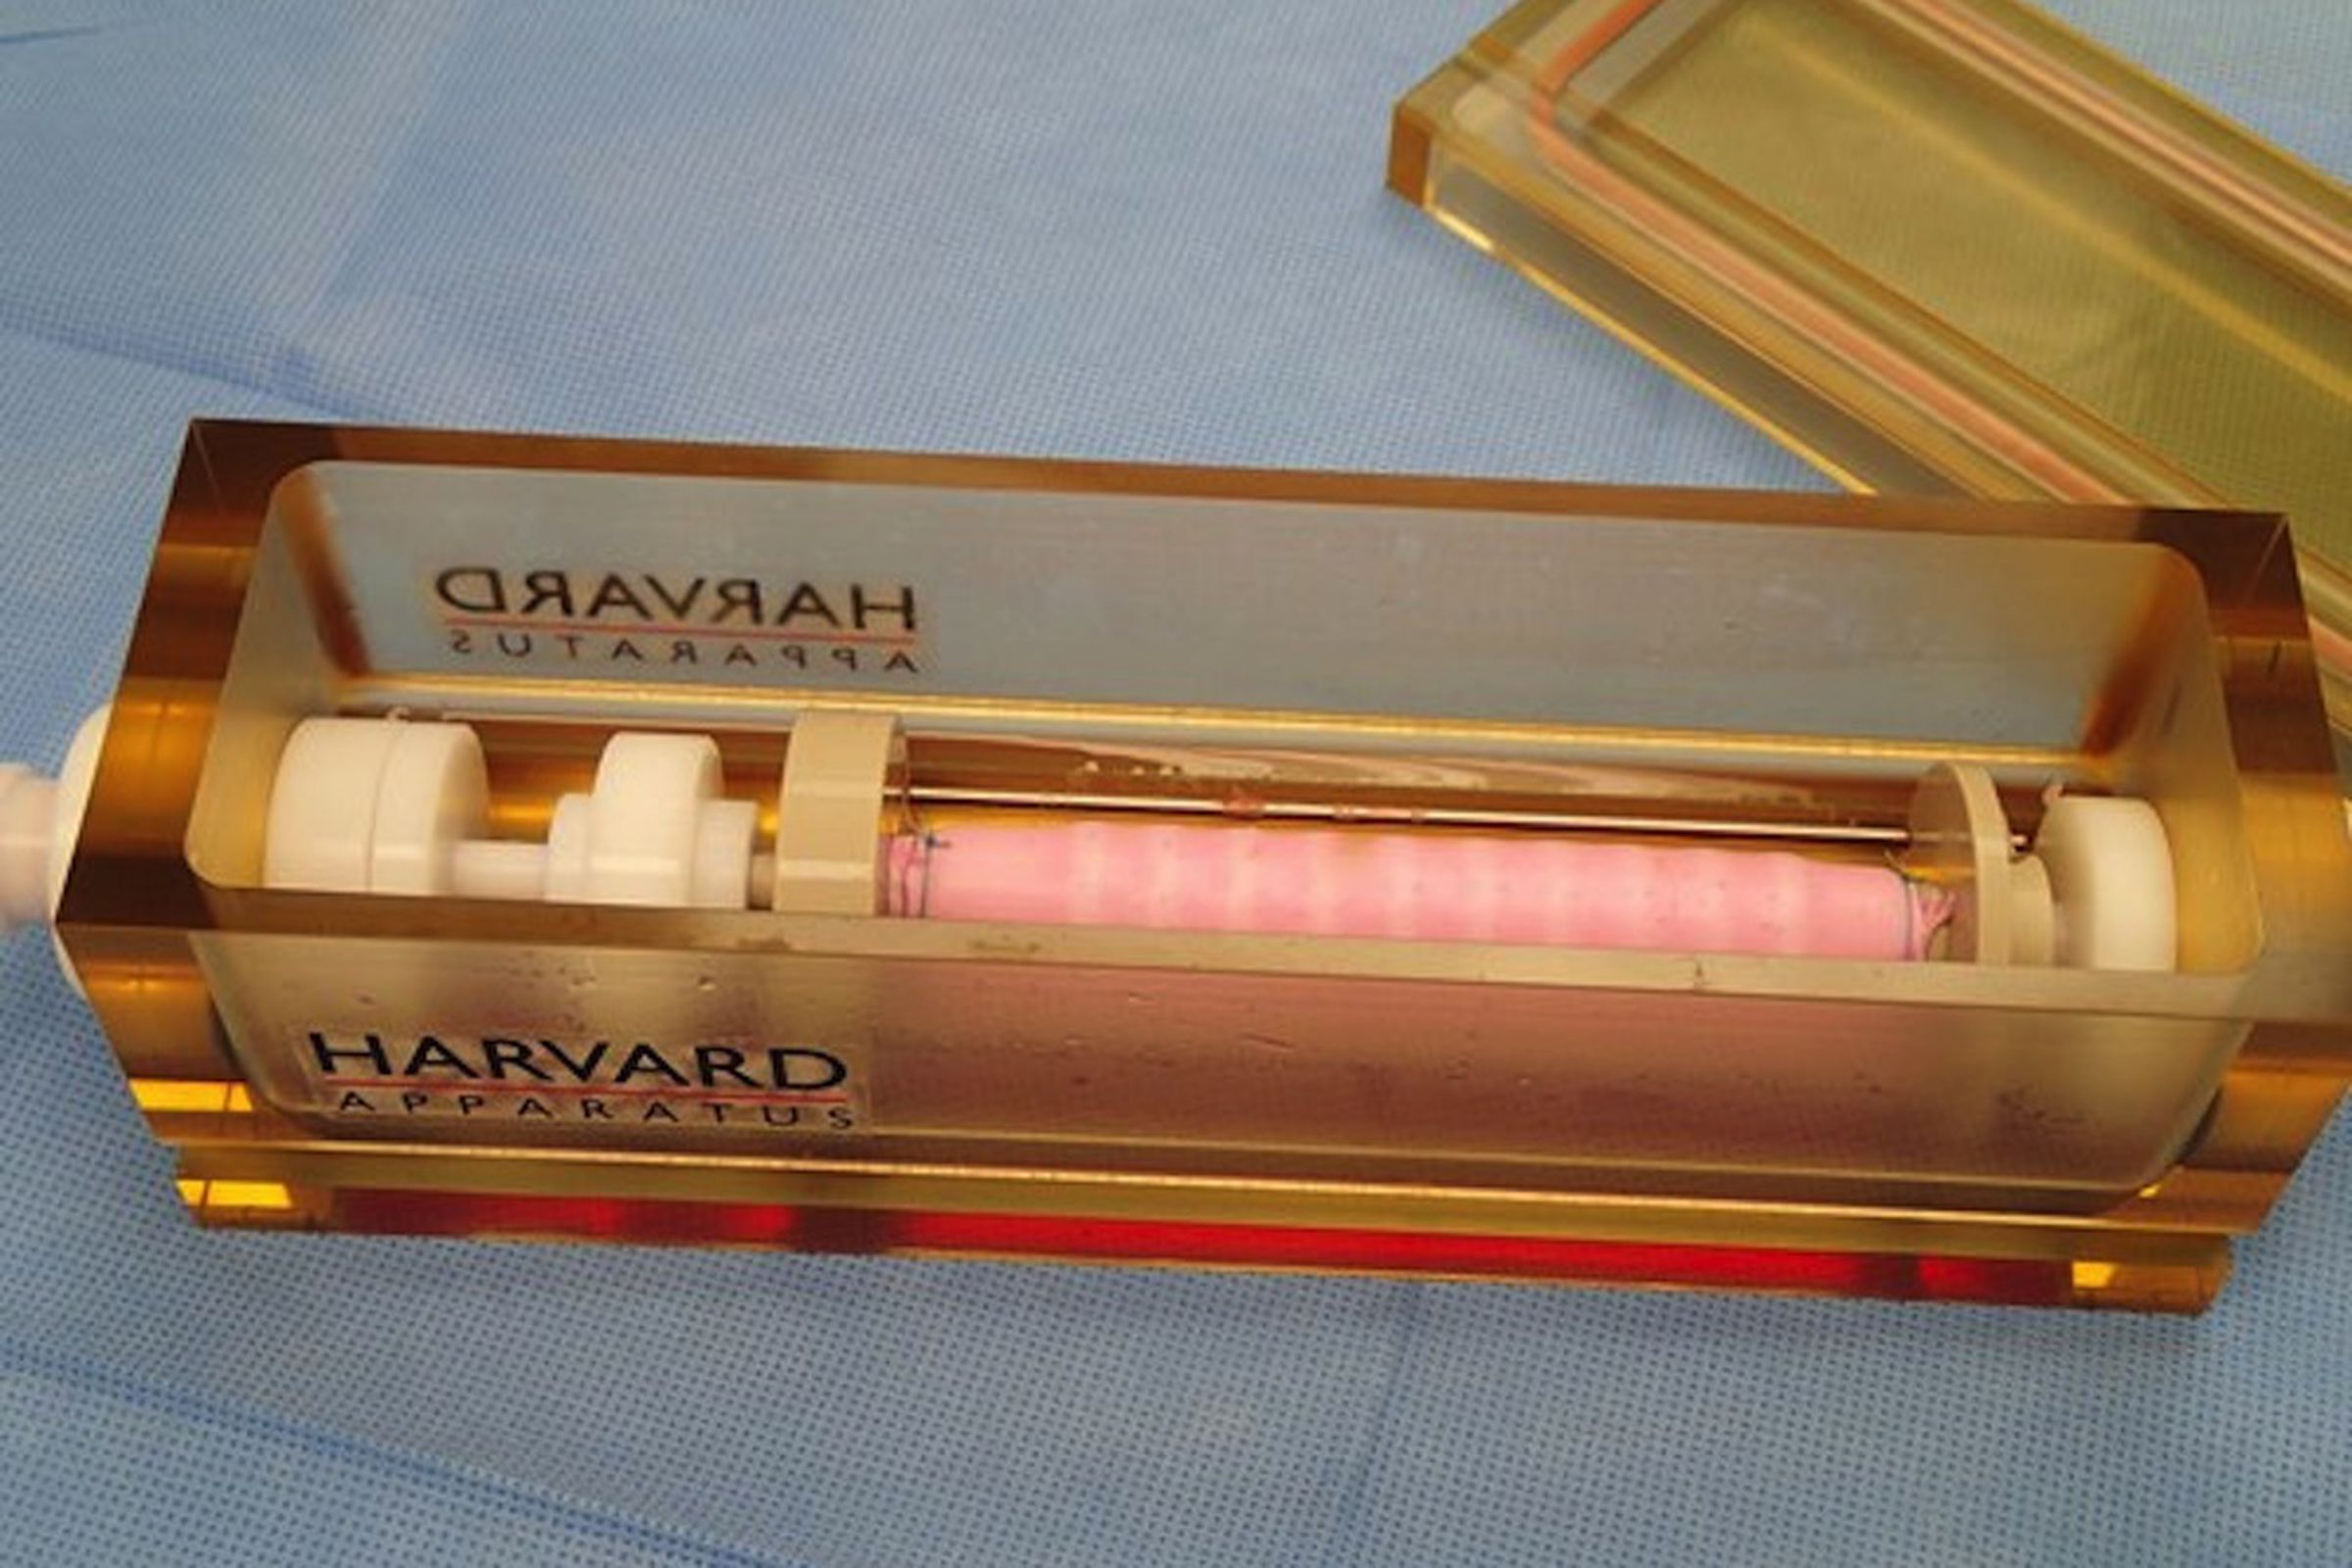 Windpipe trachea scaffold from Harvard Bioscience (Credit: Harvard Apparatus Regenerative Technology)